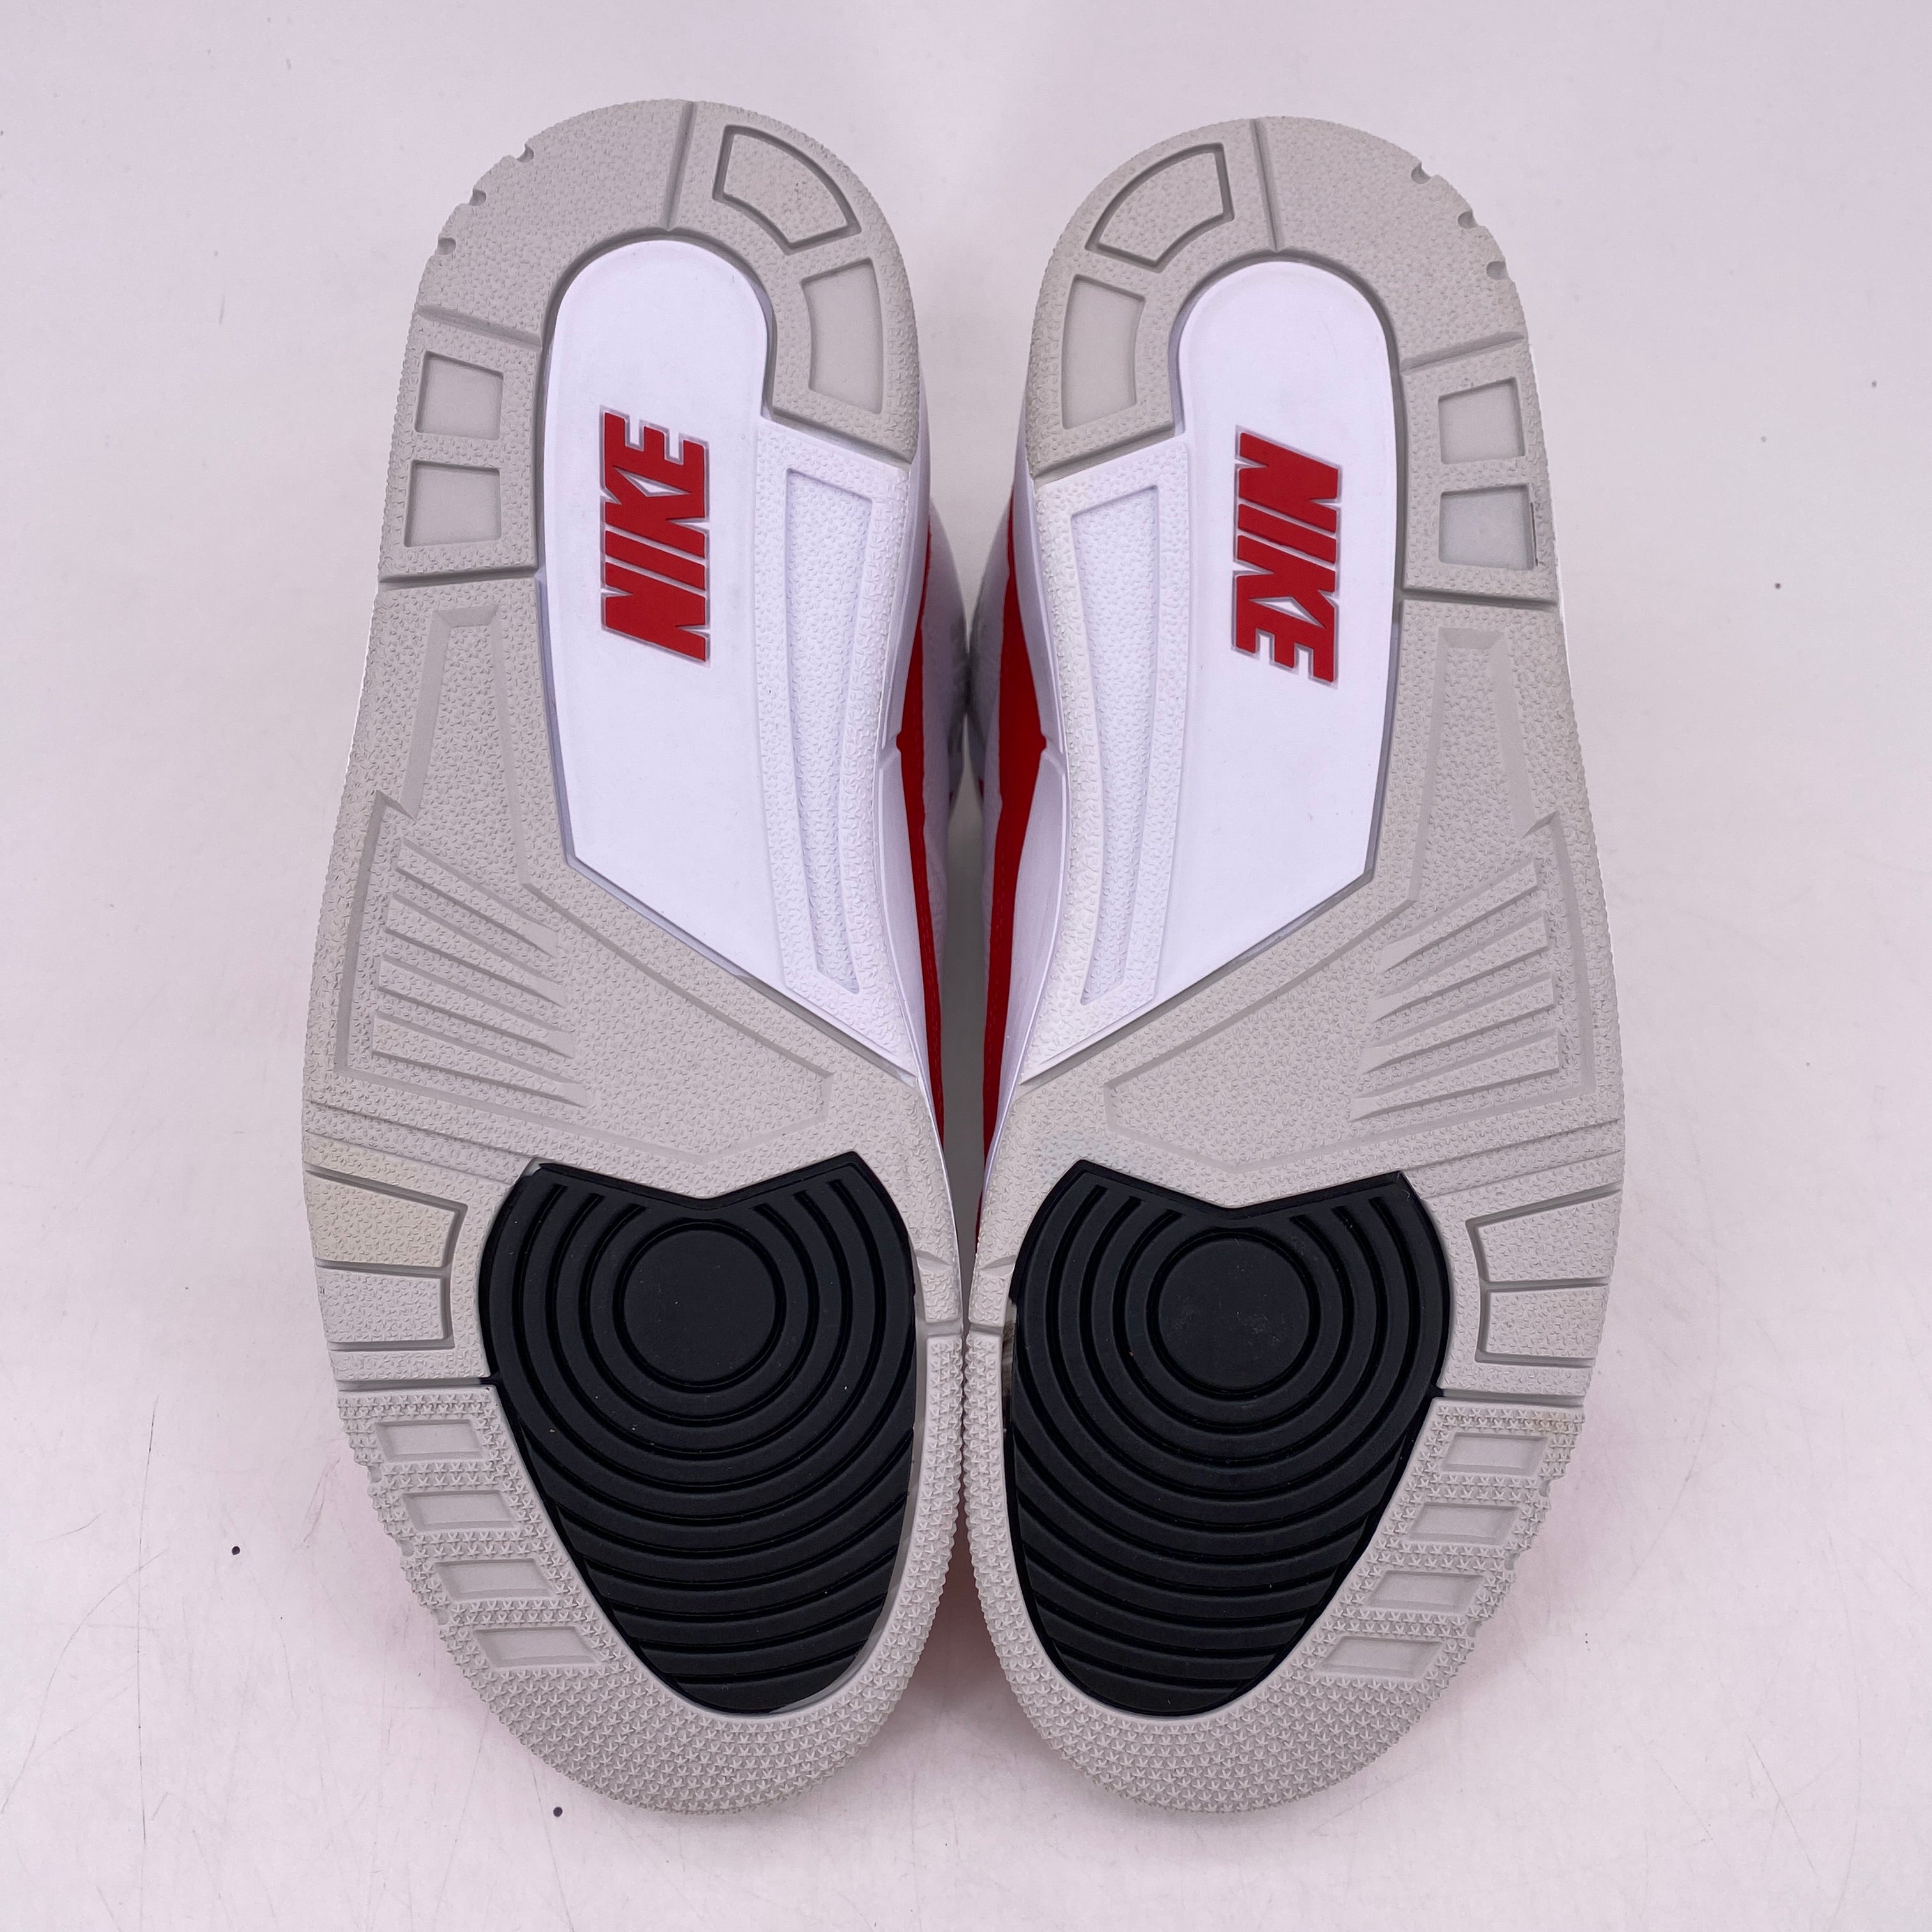 Air Jordan 3 Retro &quot;Tinker University Red&quot; 2019 New Size 8.5